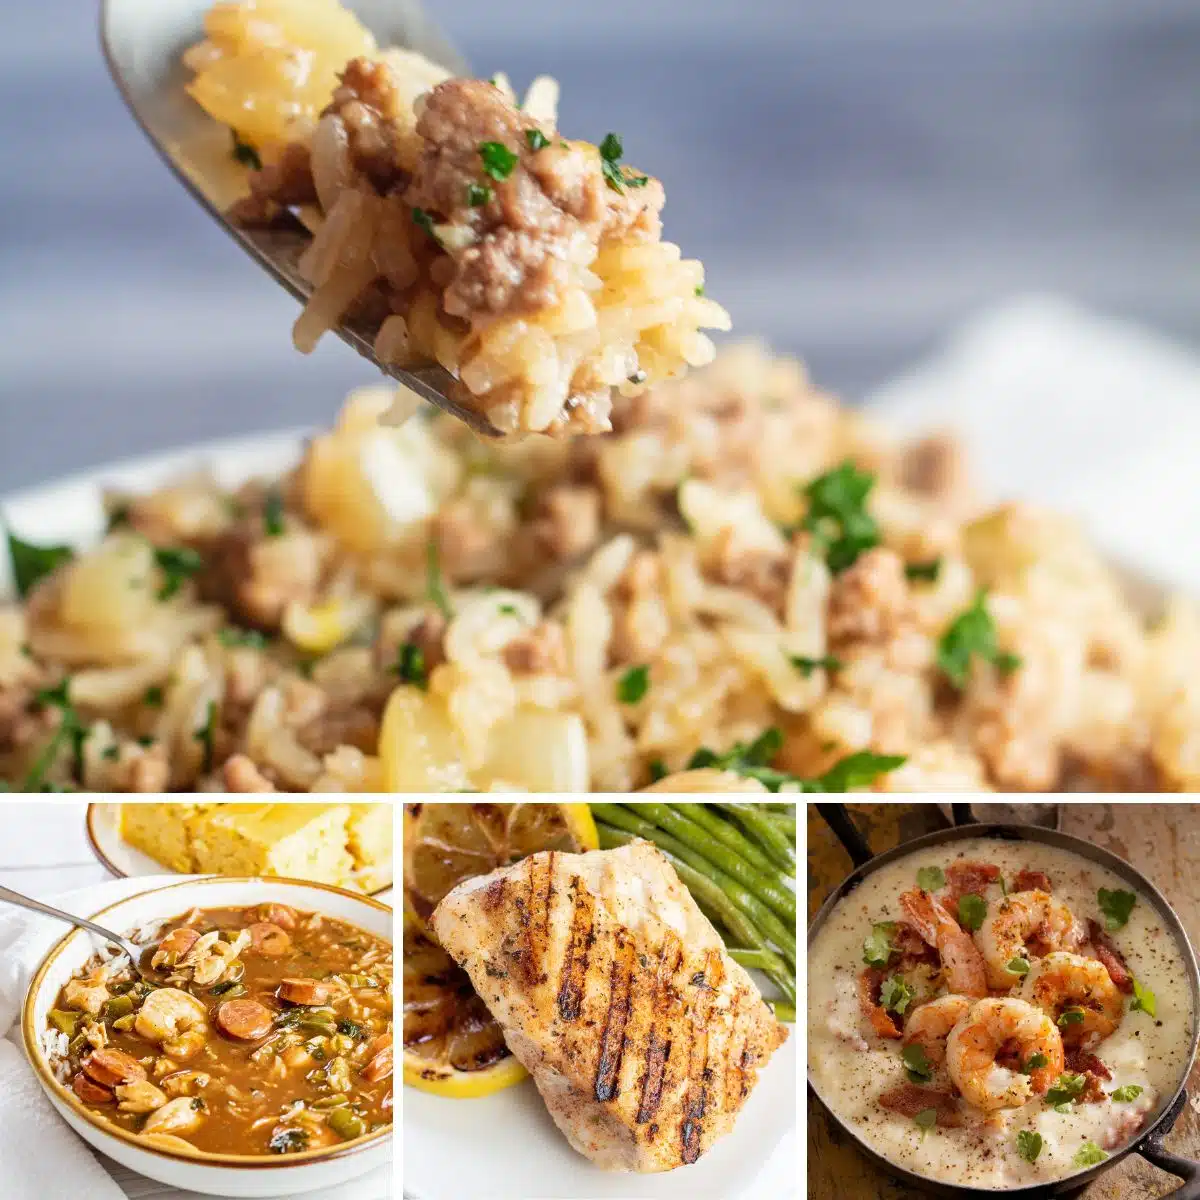 Gambar kolase resep Cajun terbaik yang menampilkan 4 makan malam dan lauk favorit kami.